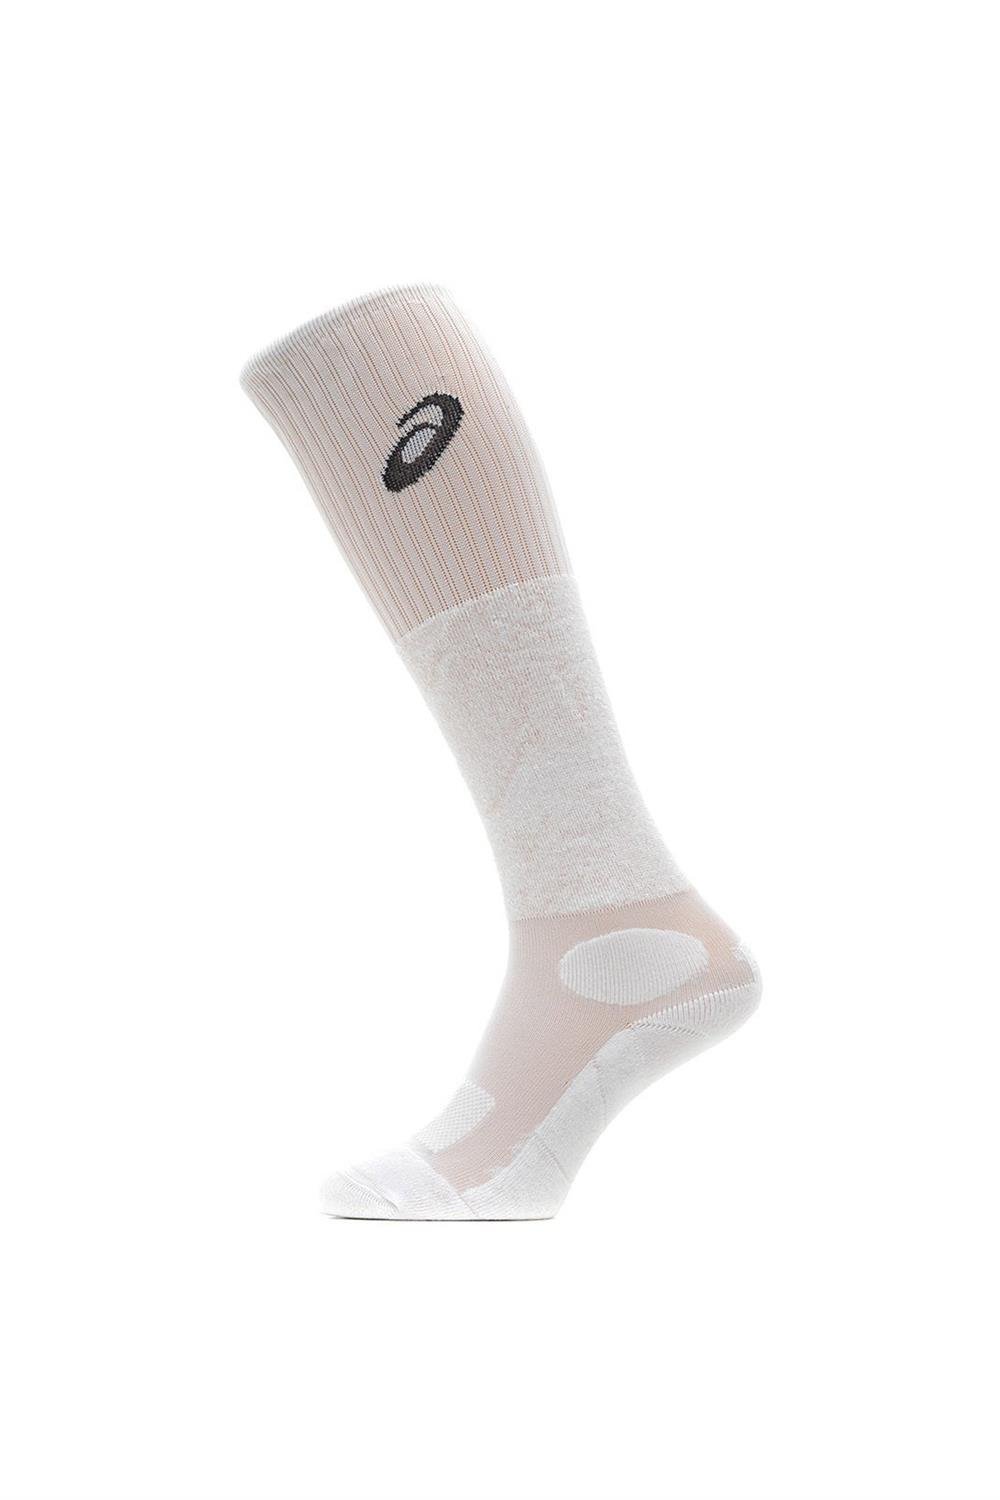 Asics Volley Long Sock Unisex Voleybol Çorabı 155994-0001 | Sporborsasi.com